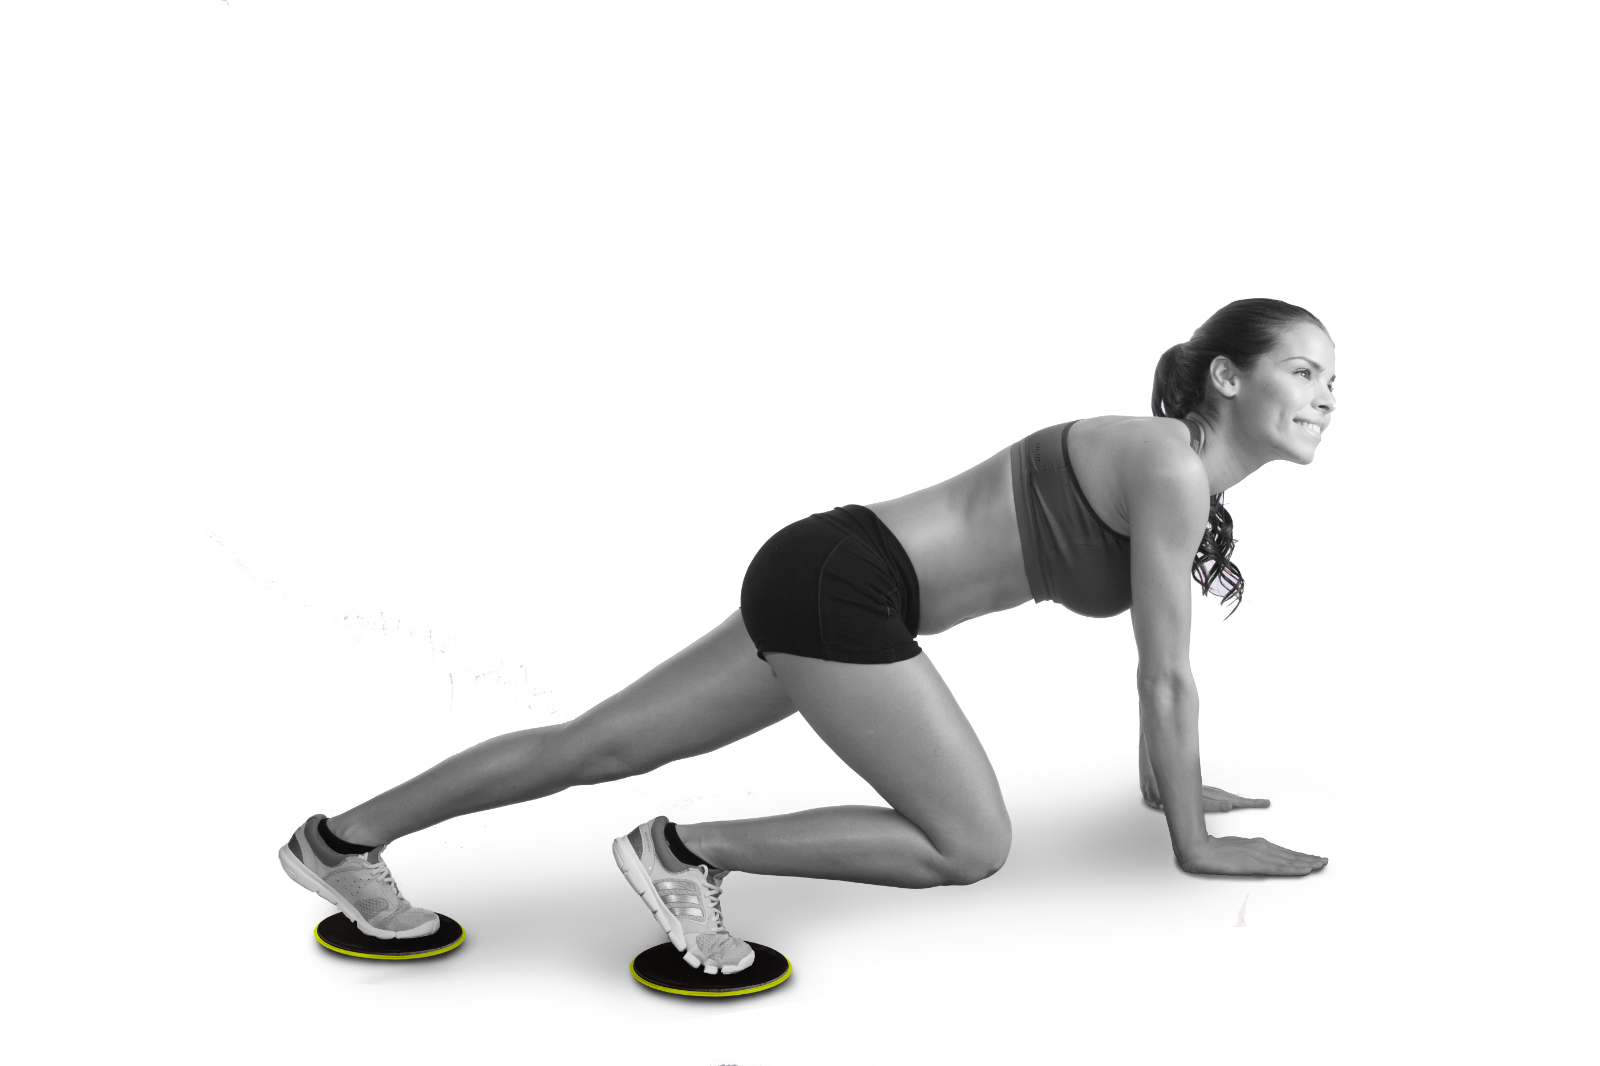 Core Slider Discs yoga Pilates aerobics conditioning. Body